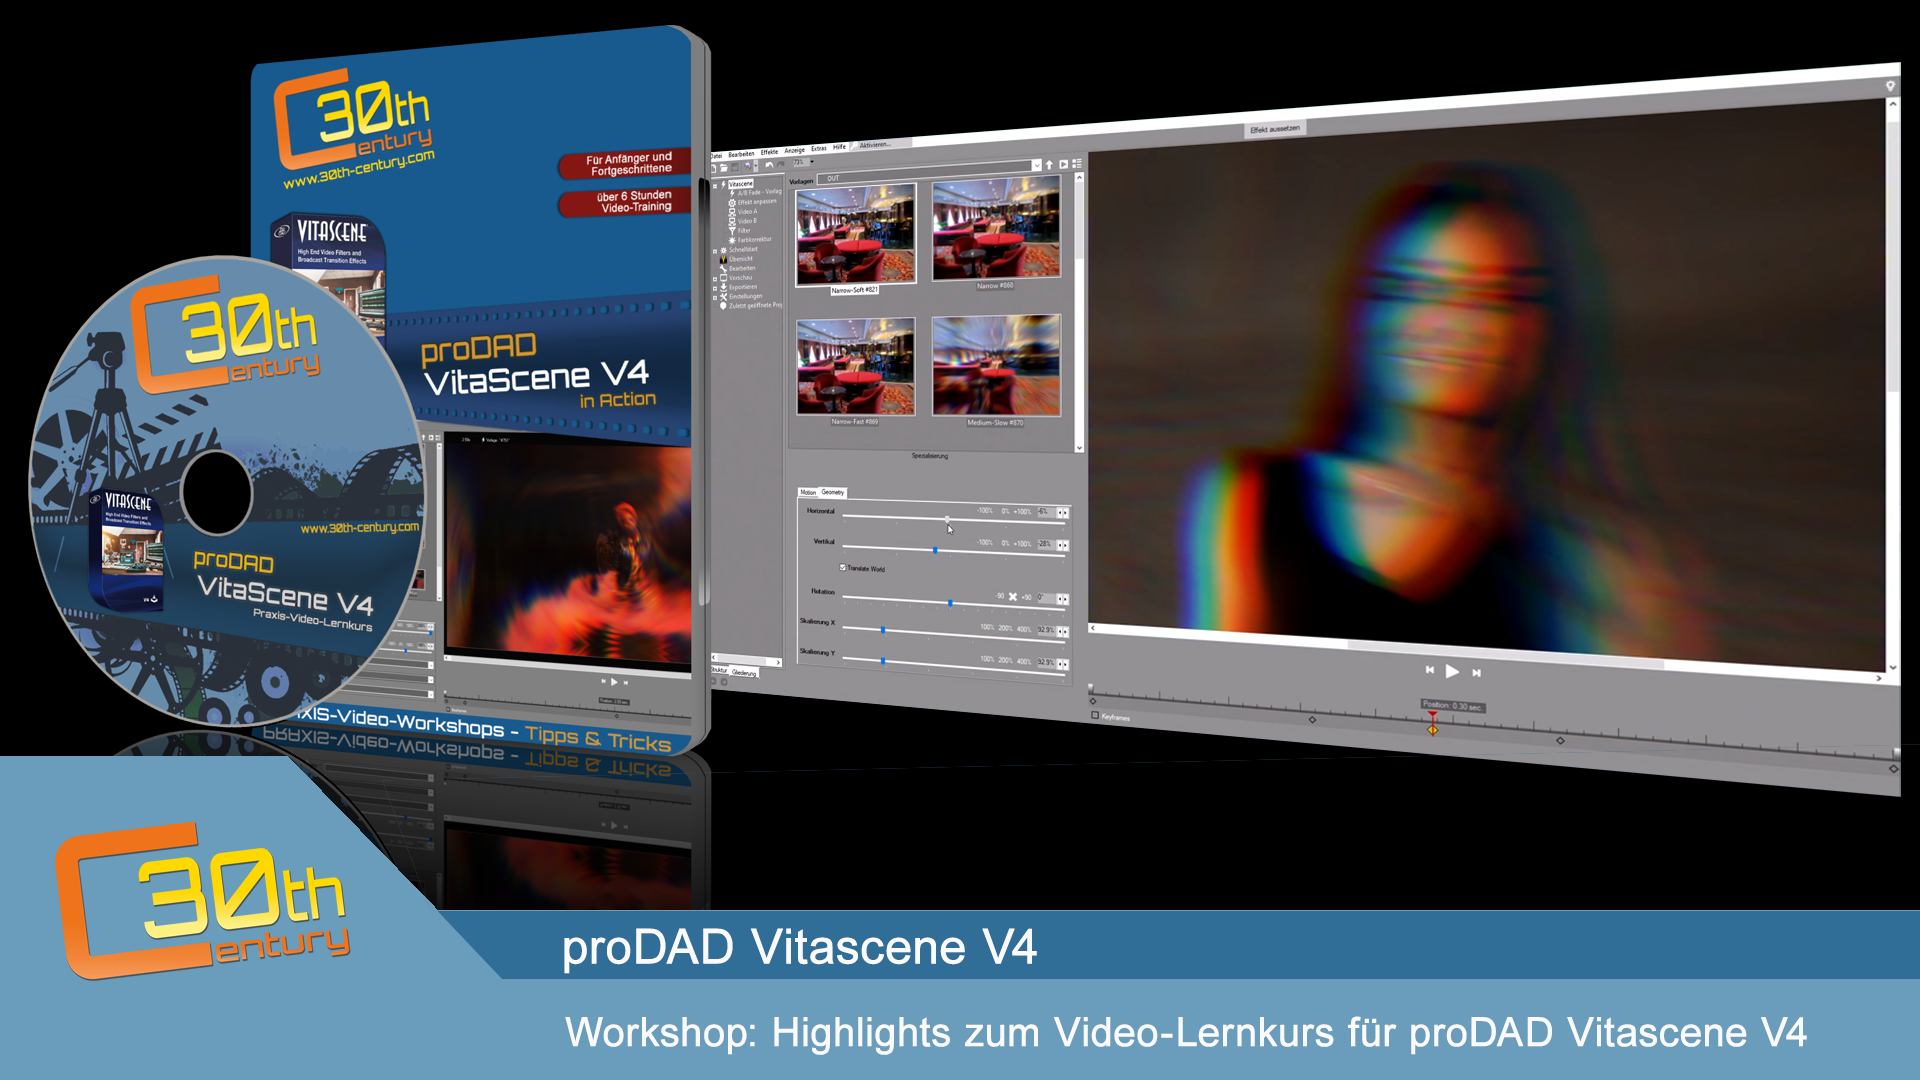 proDAD VitaScene 5.0.312 instal the new for windows